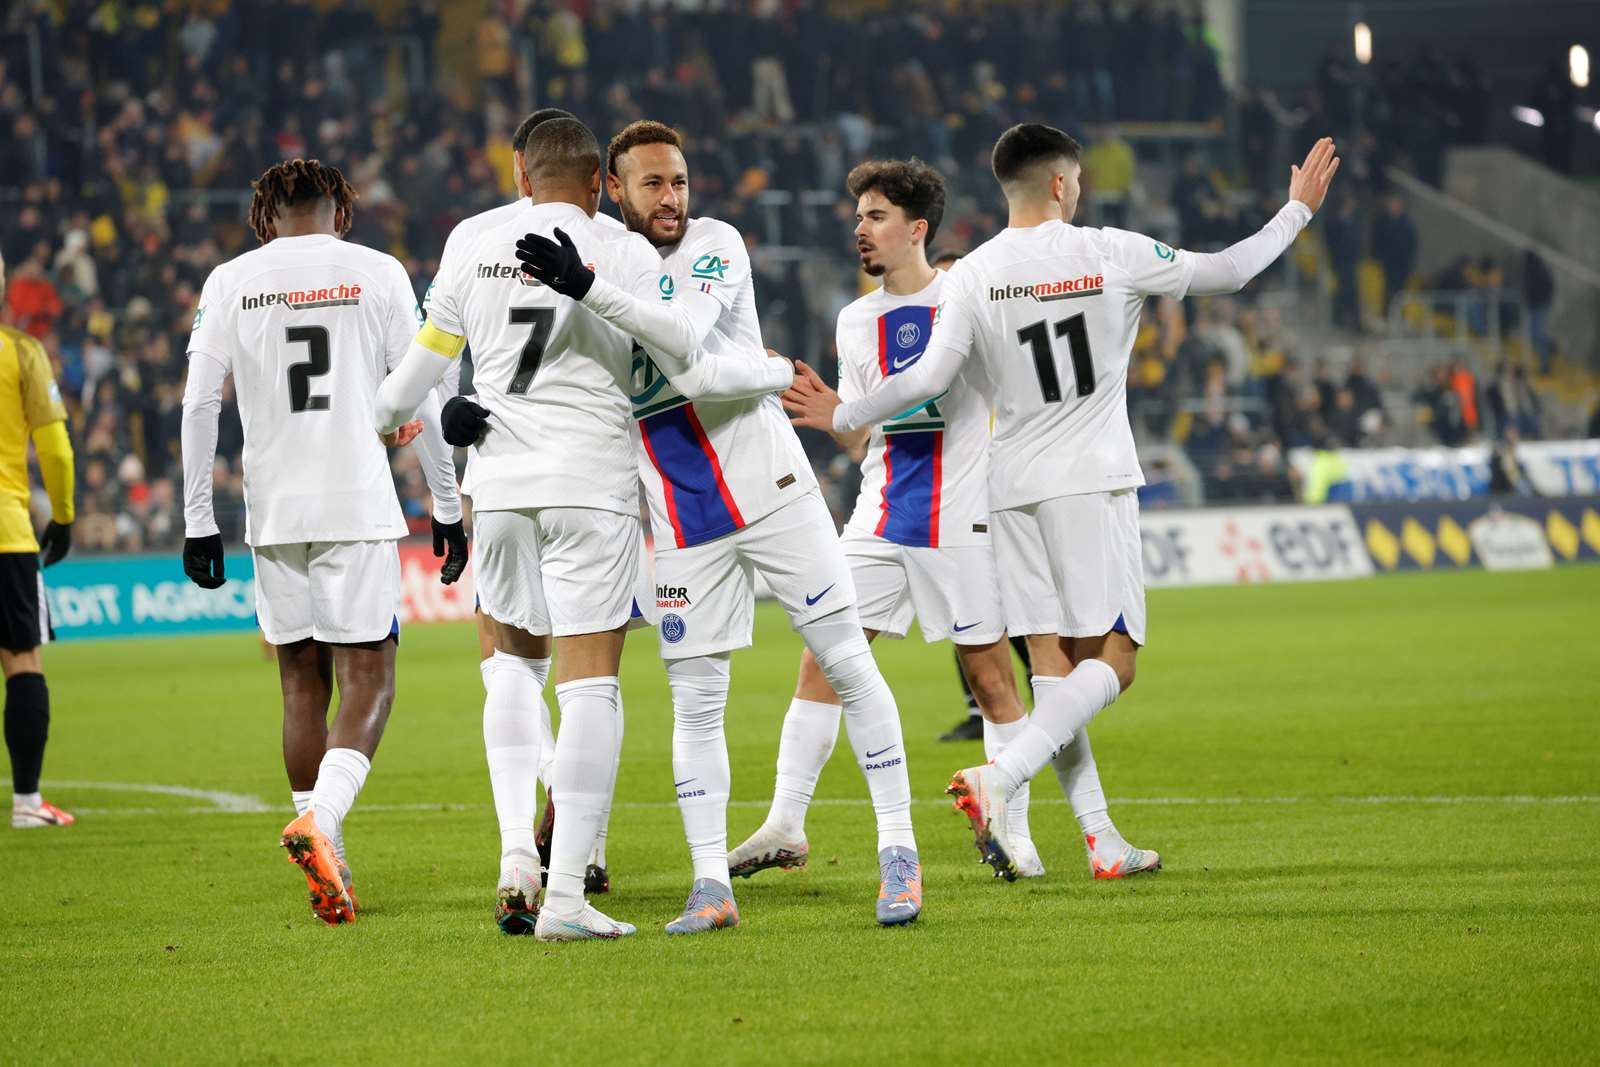 Com golaço de Mbappé, PSG vence Real Madrid por 1 a 0 na Champions League